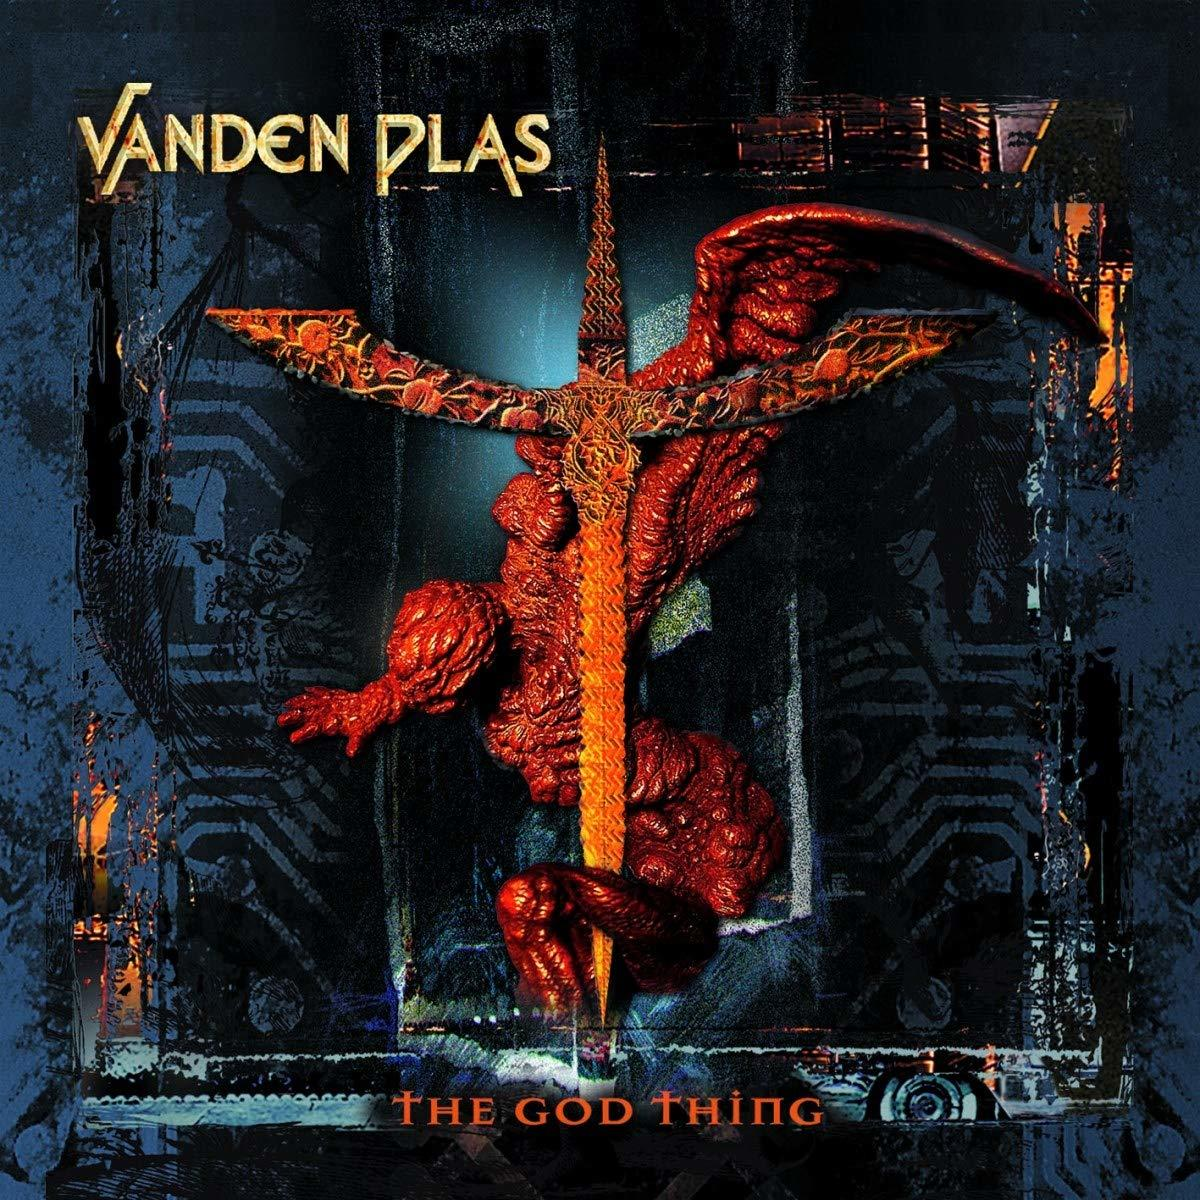 Vanden Thing God - - Plas The (Gatefold/Red/180g/2LP) (Vinyl)